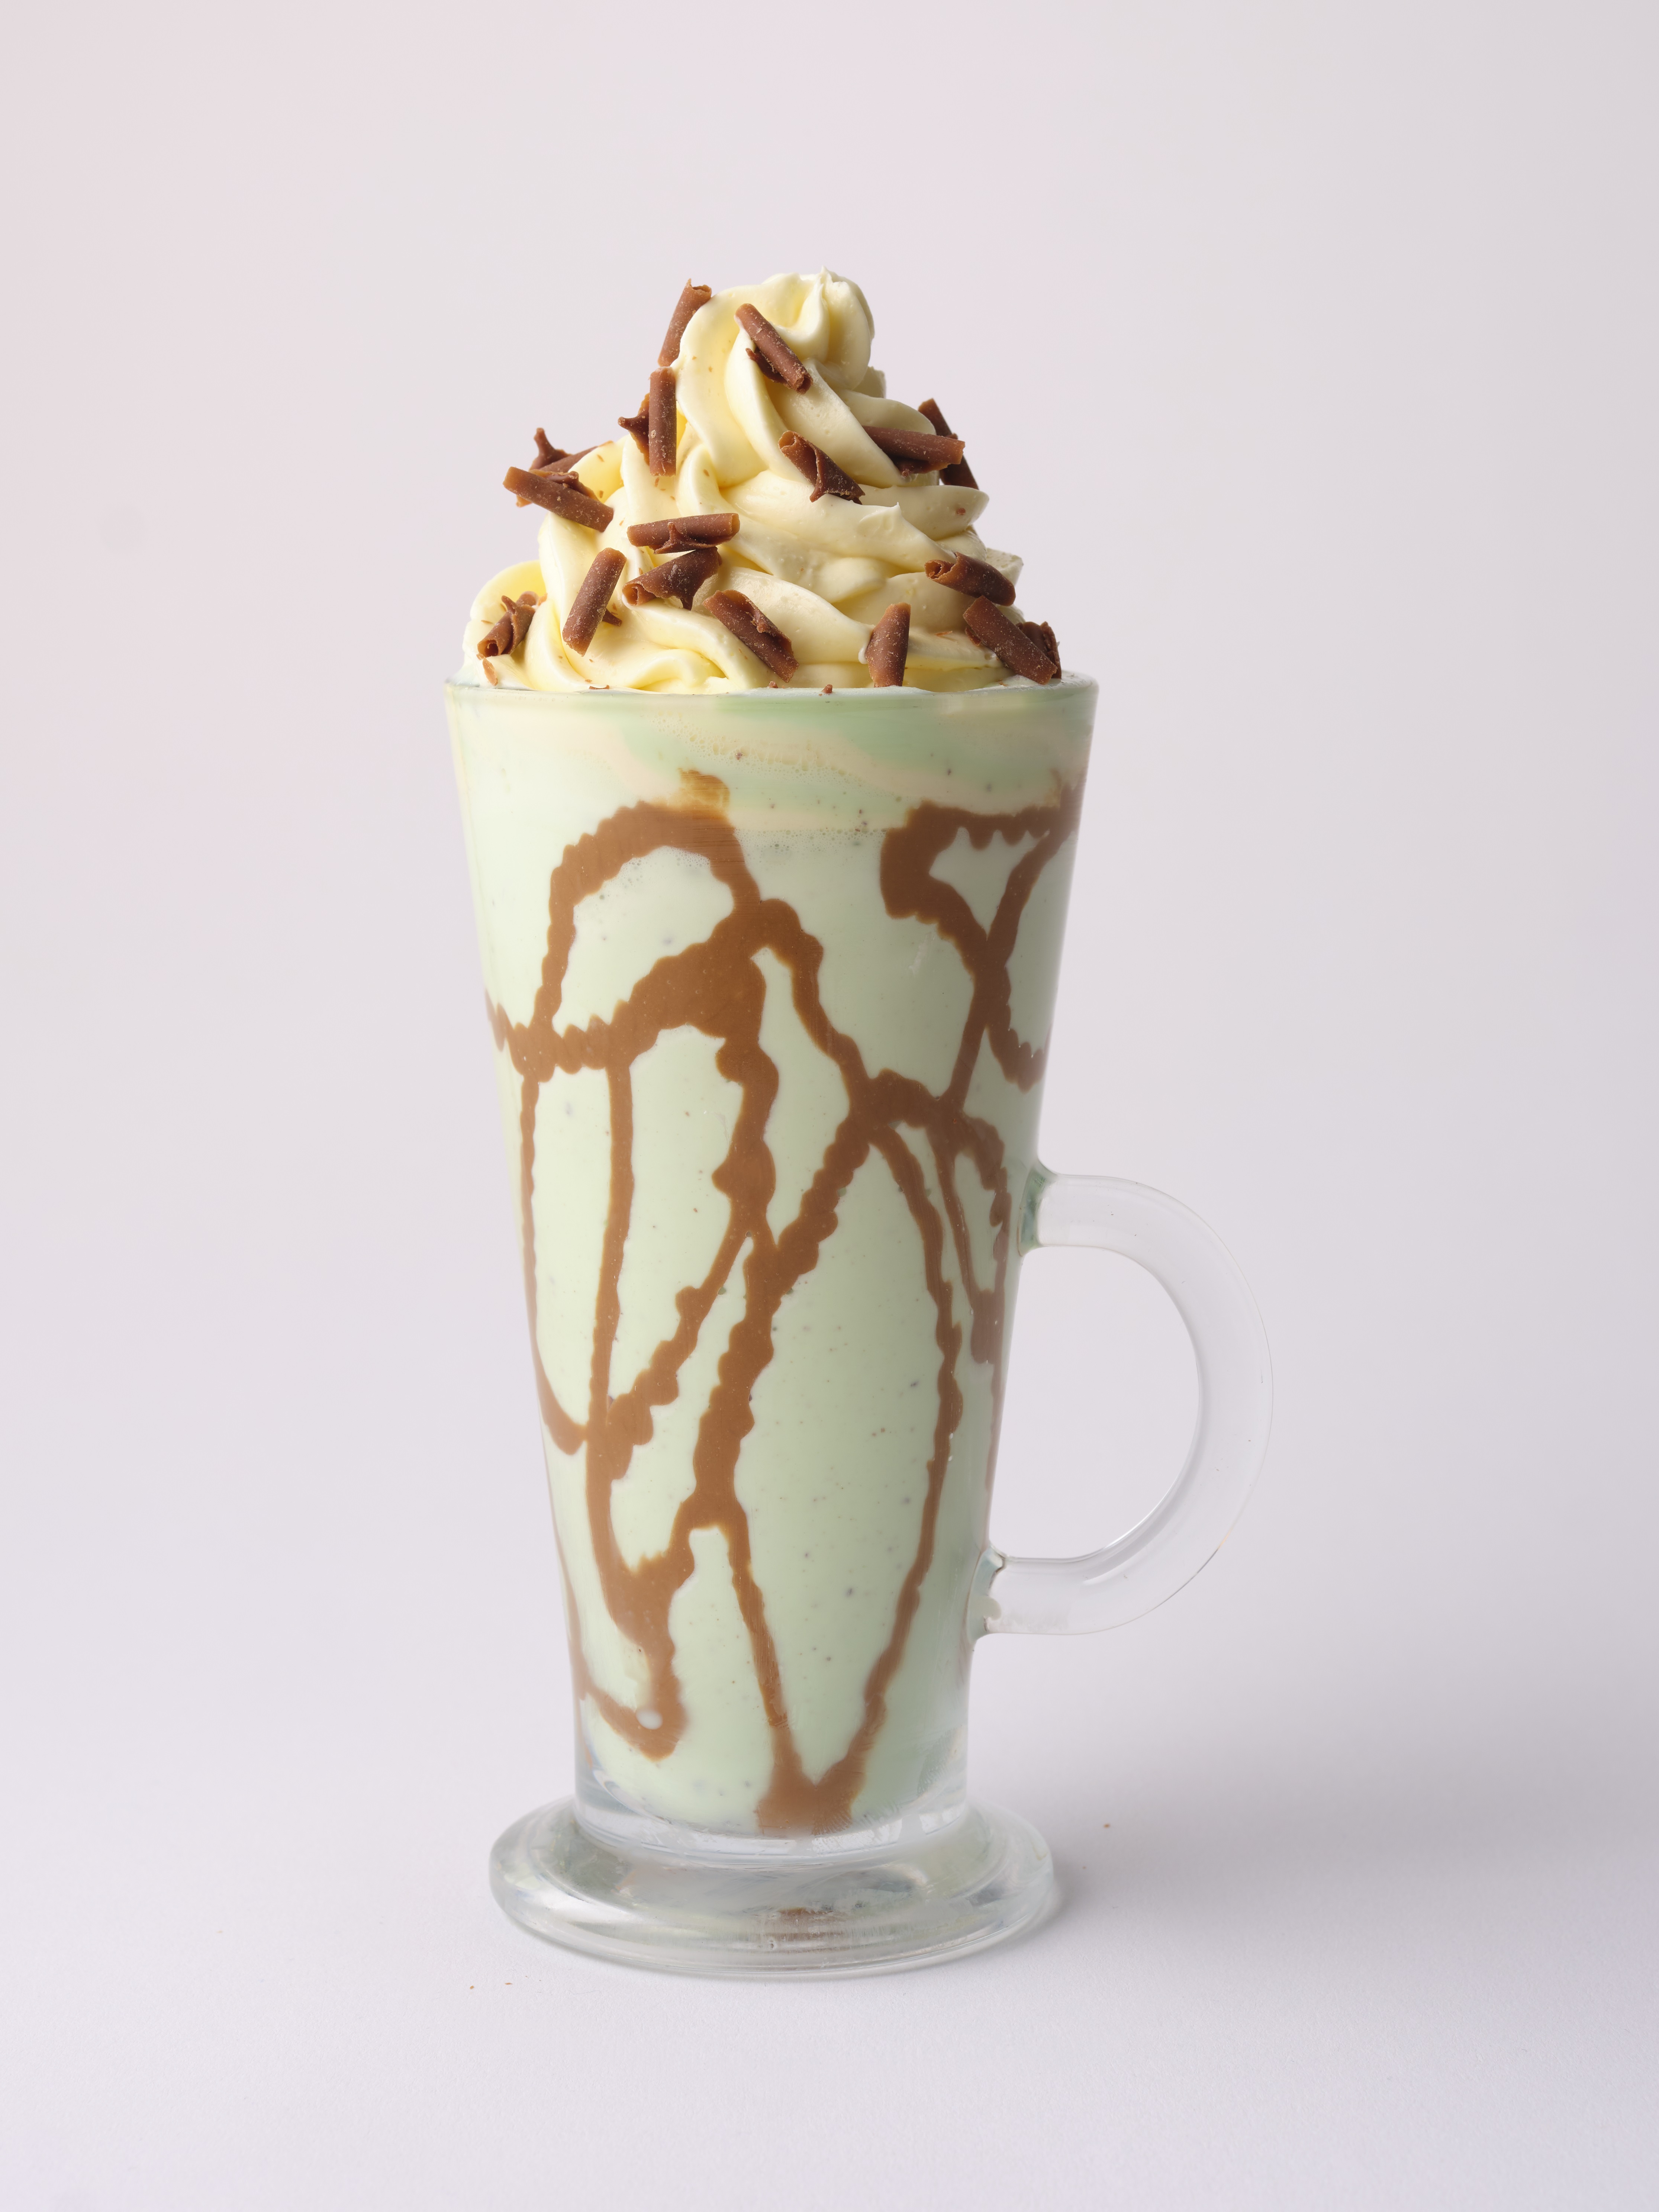 Creams Cafés bieten vier Hot GeLattes-Geschmacksrichtungen für jeweils 3,95 £ an